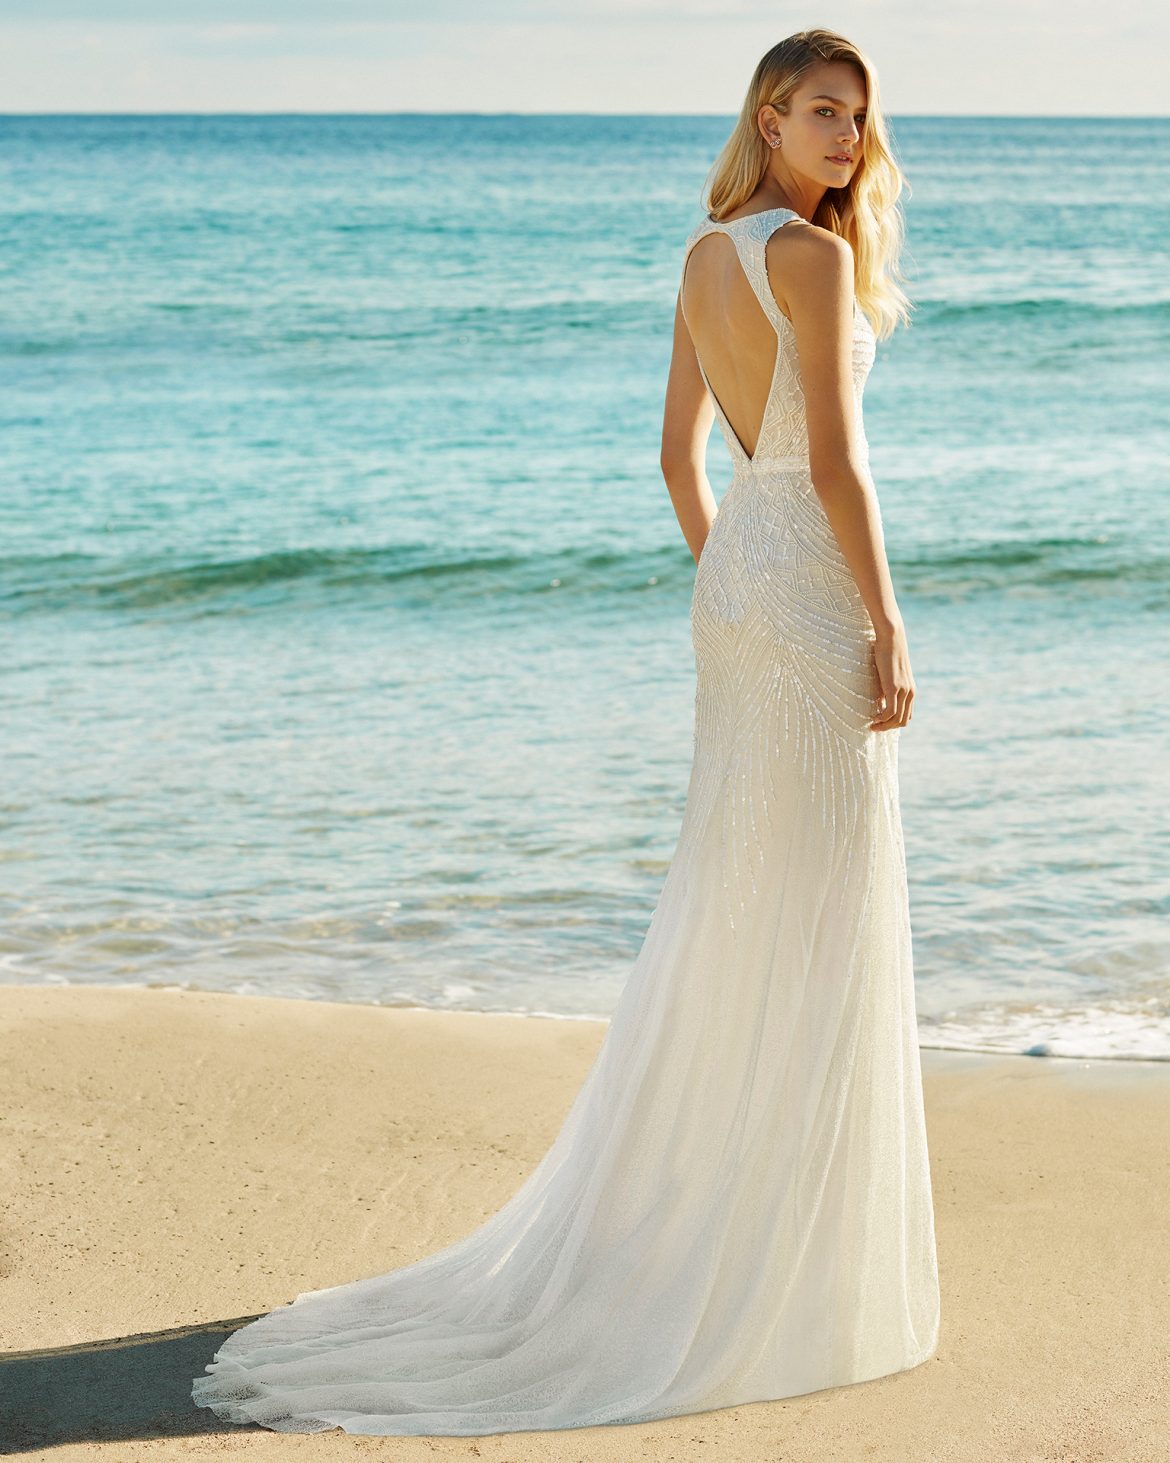 21 Best Beach Wedding Dresses For 2022 - Royal Wedding